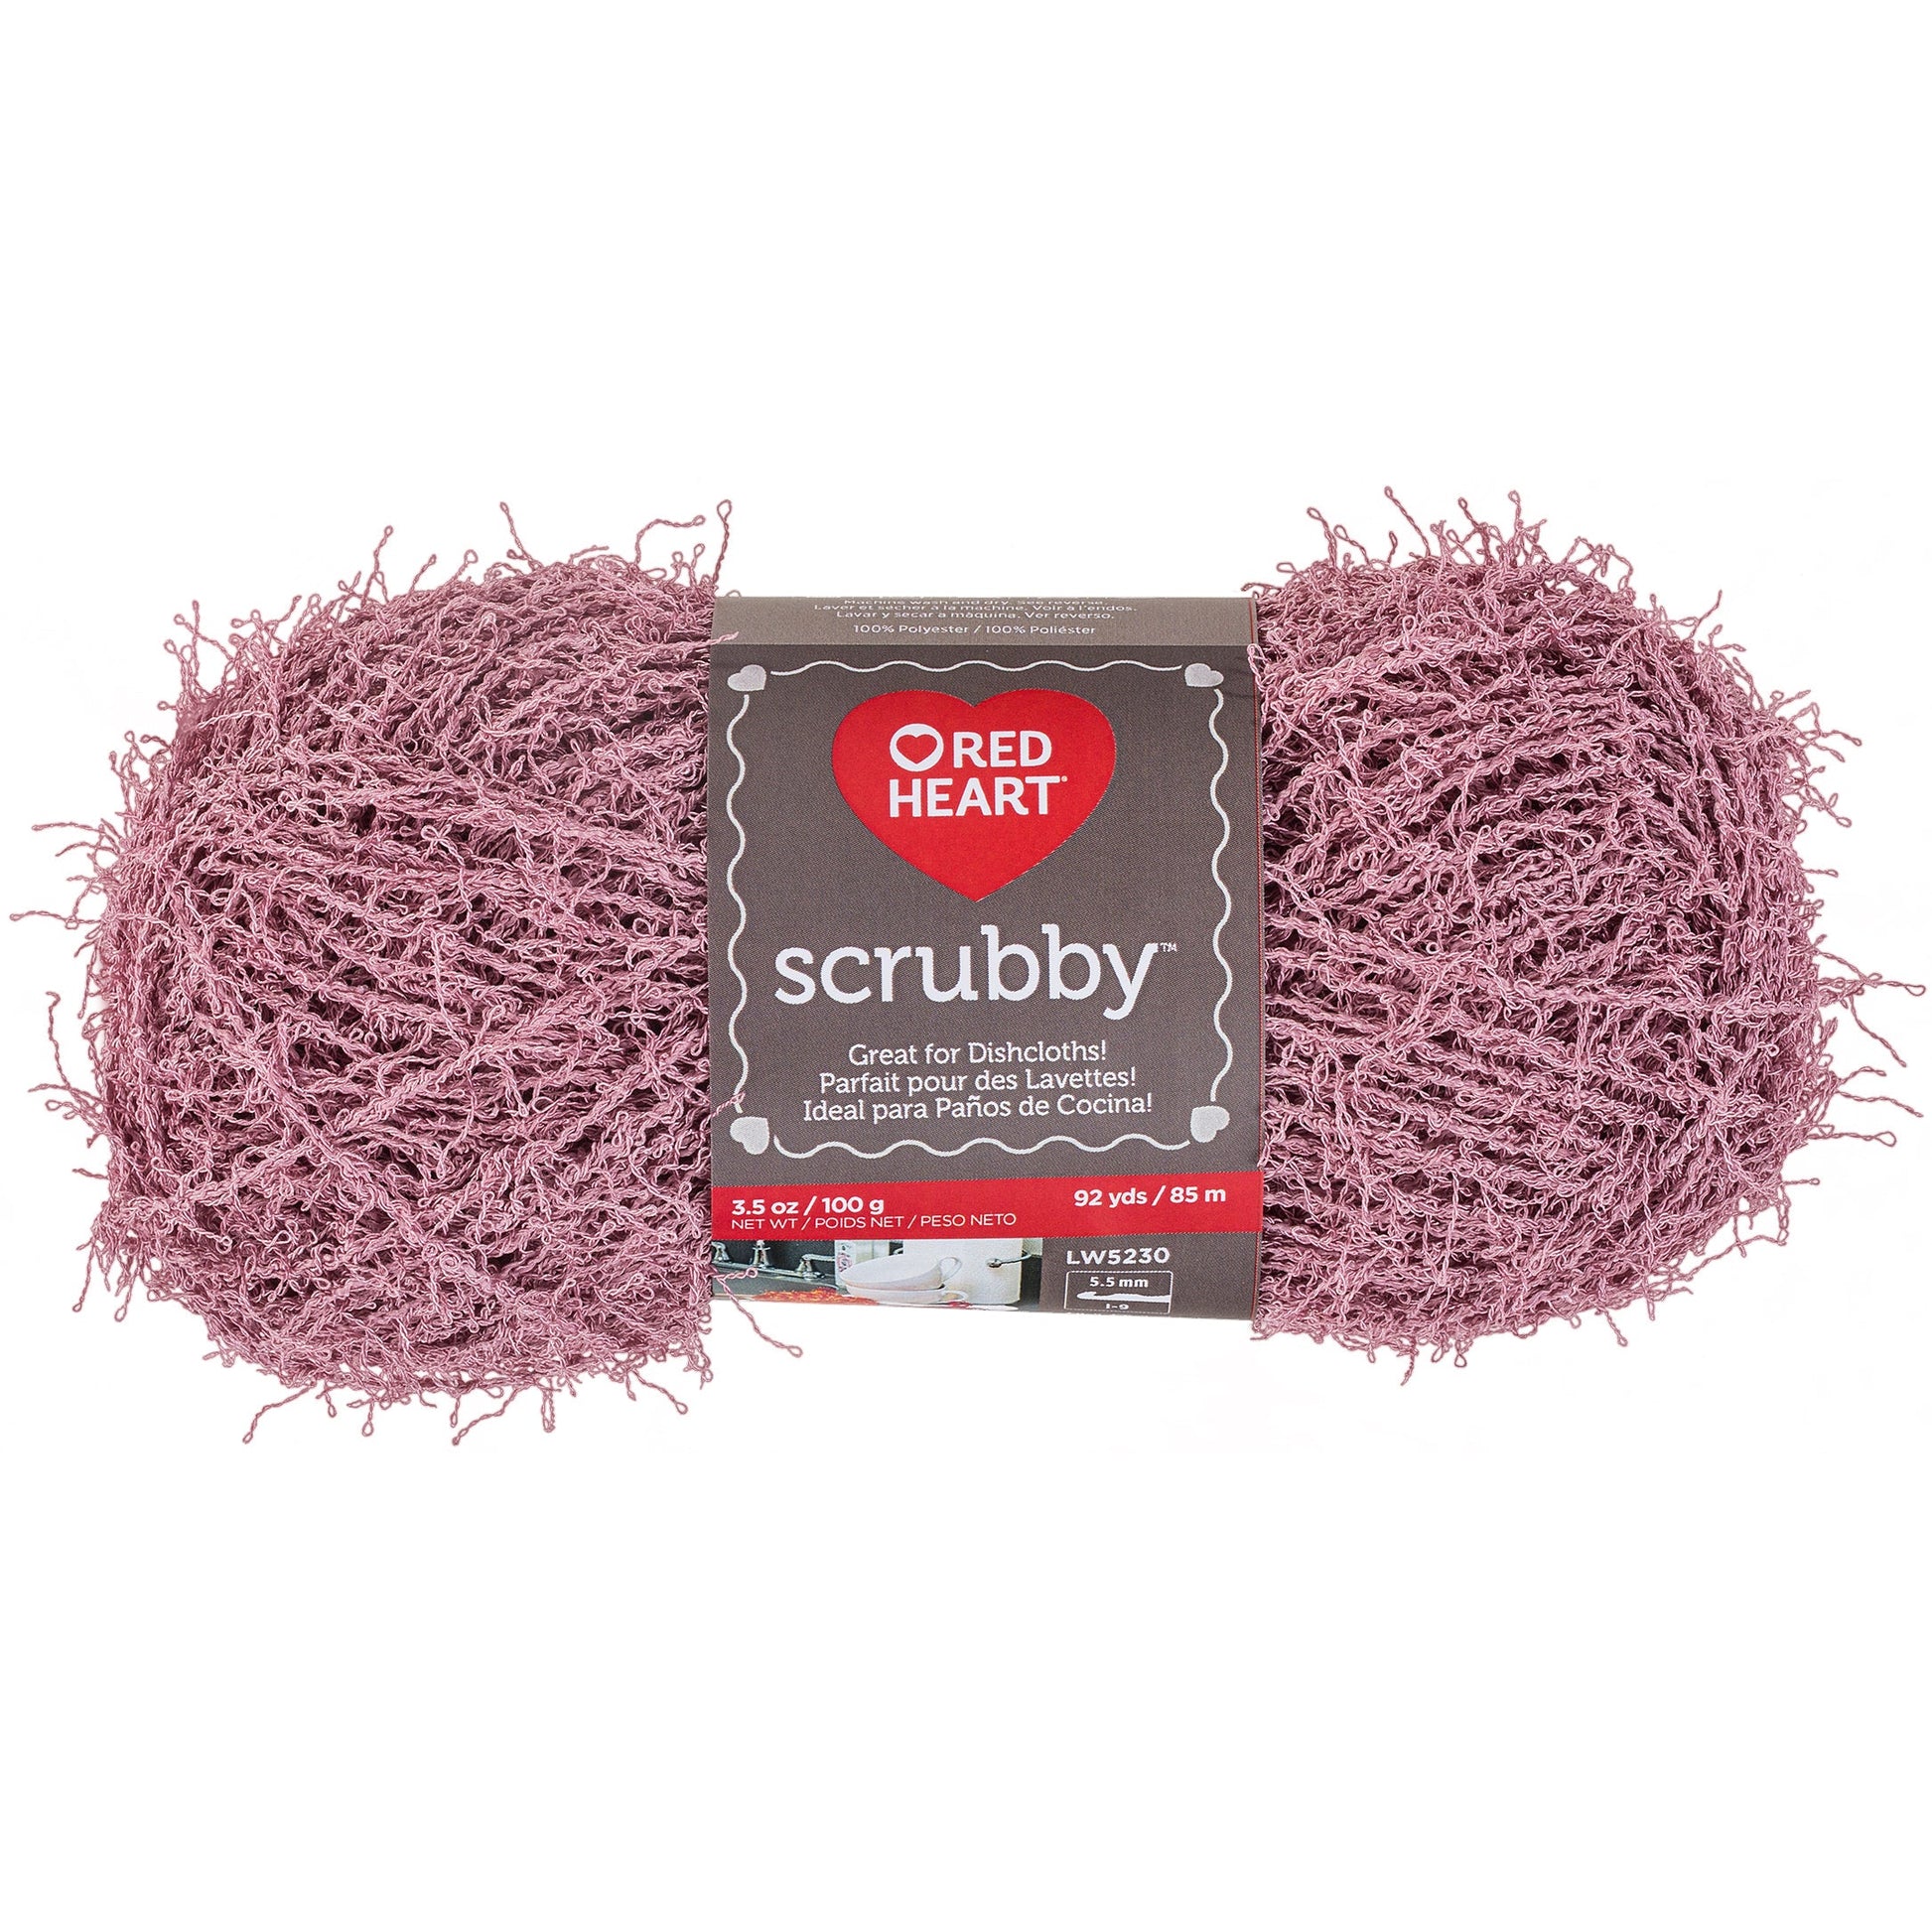 Red Heart Scrubby Royal Yarn - 3 Pack of 100g/3.5oz - Polyester - 4 Medium  (Worsted) - 92 Yards - Knitting/Crochet